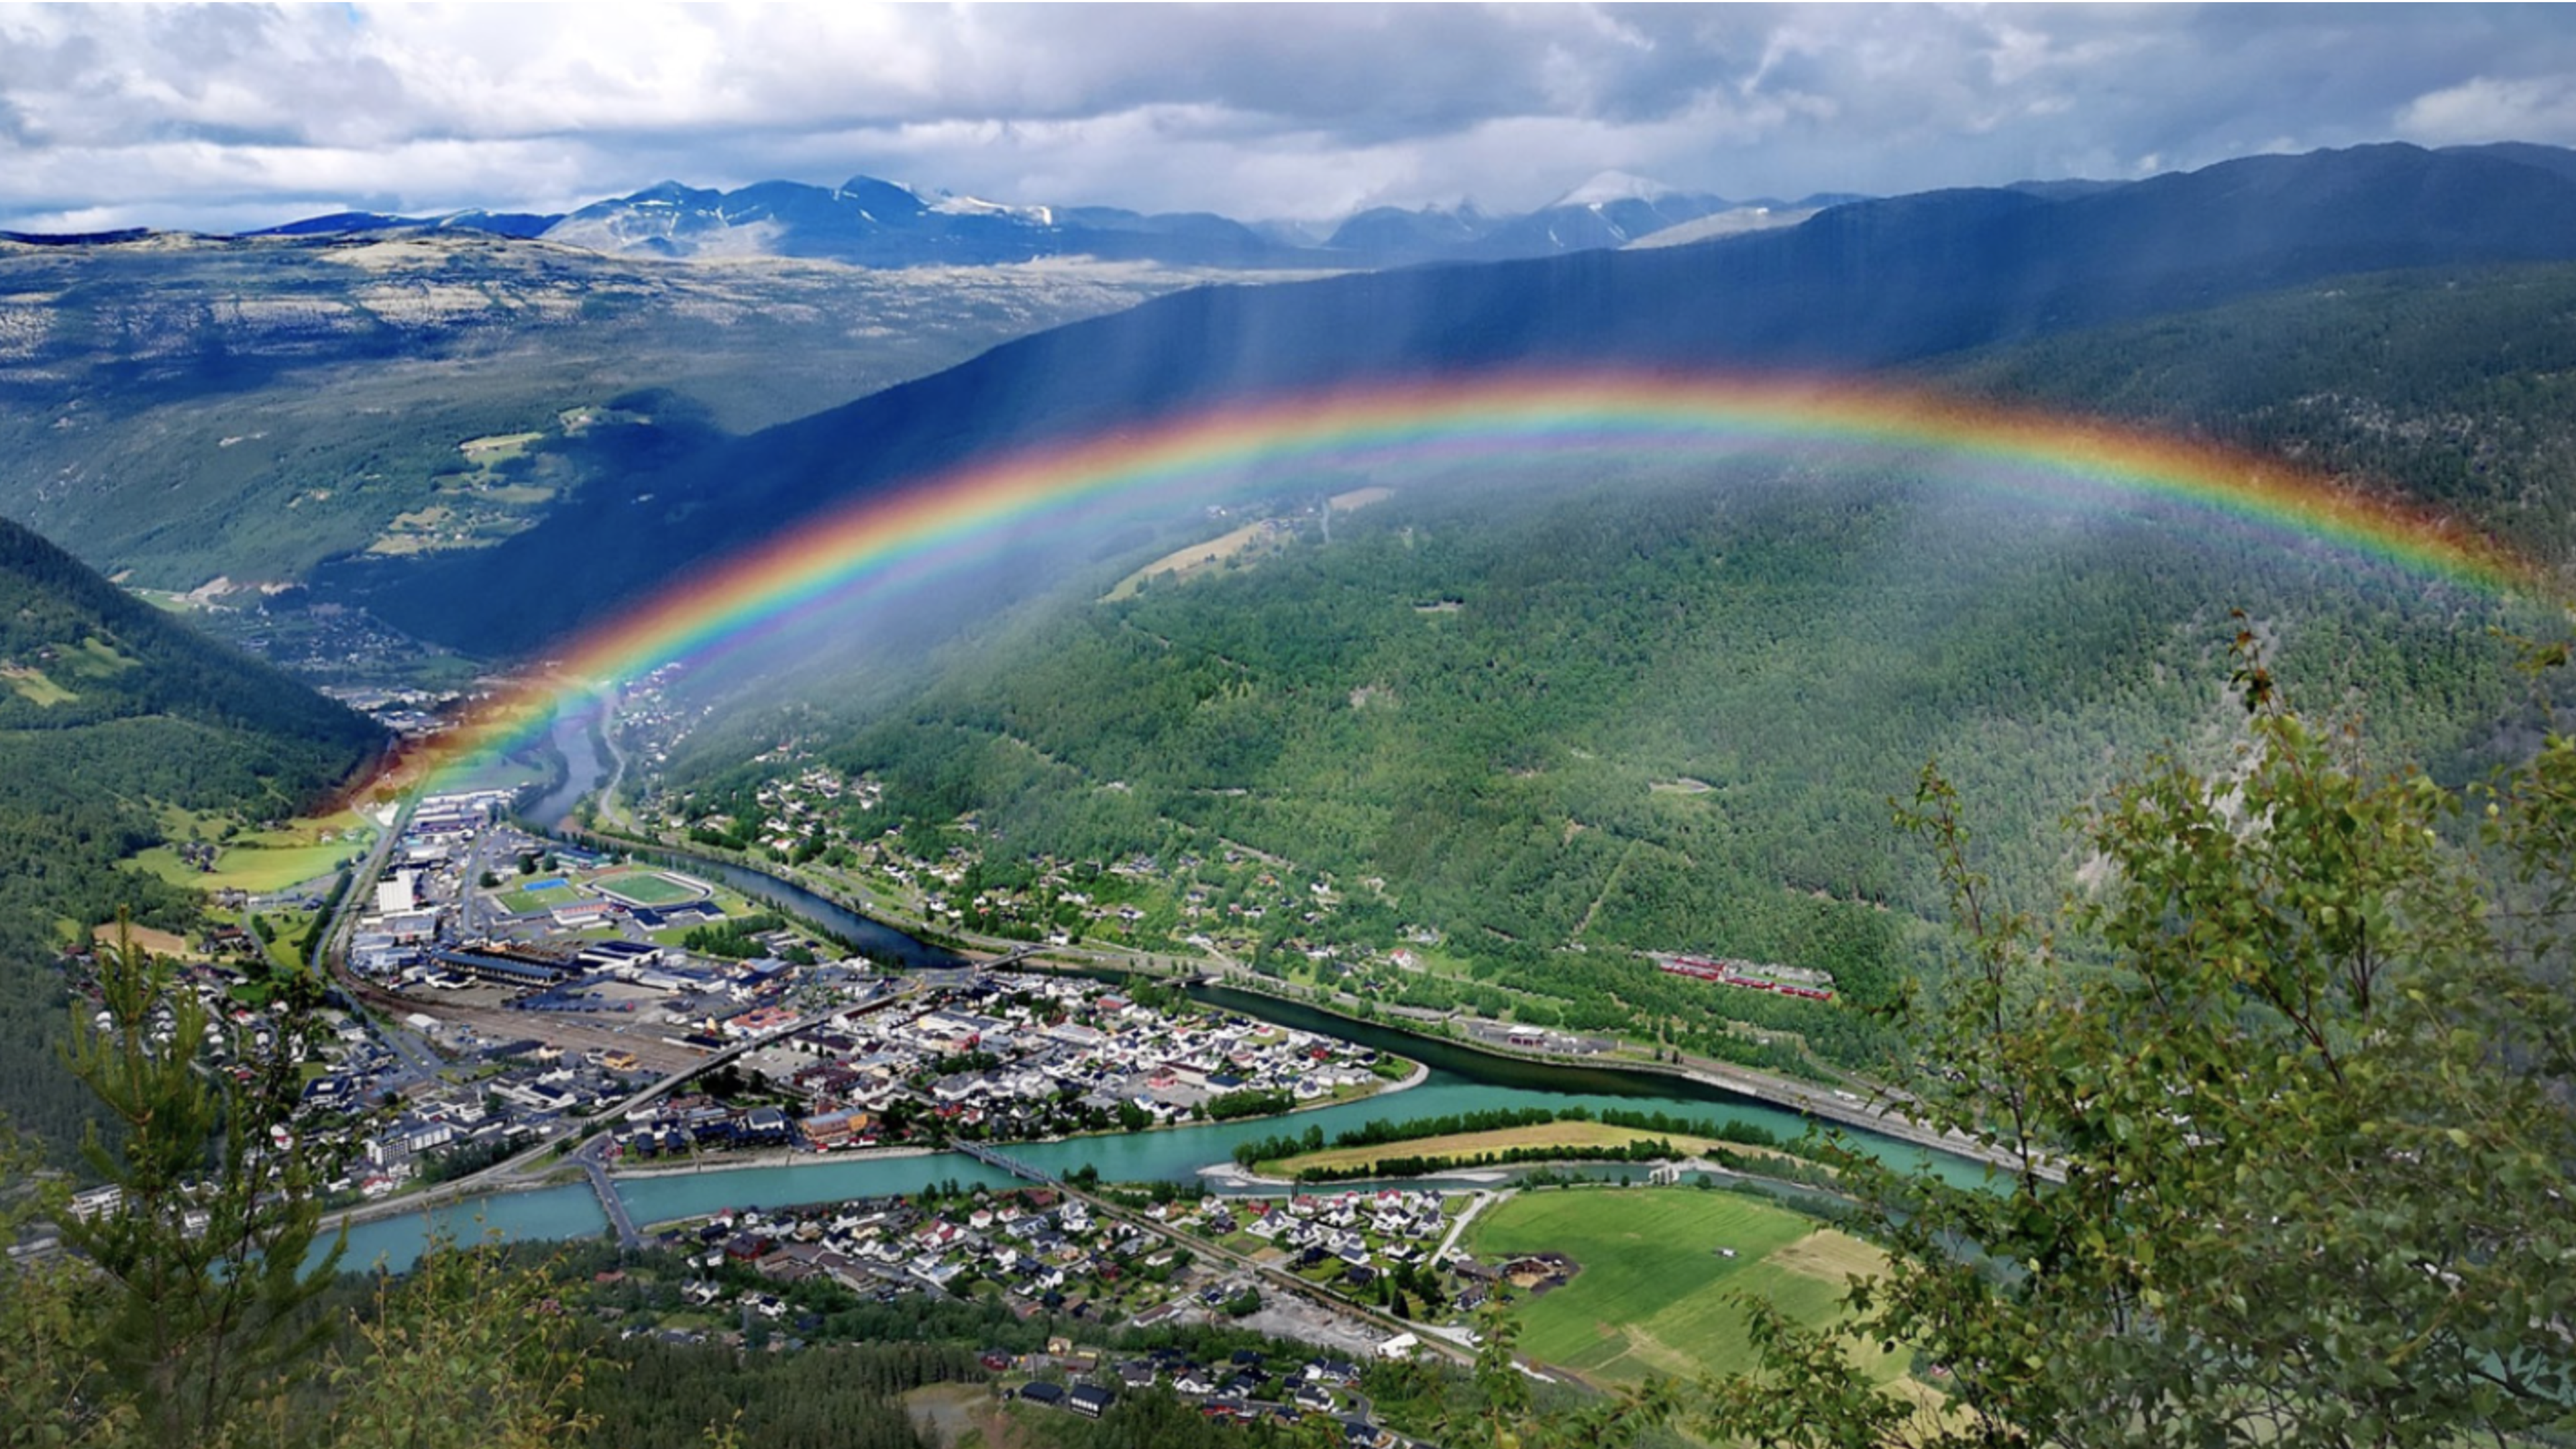 Flyfoto av Sel under en stor regnbue